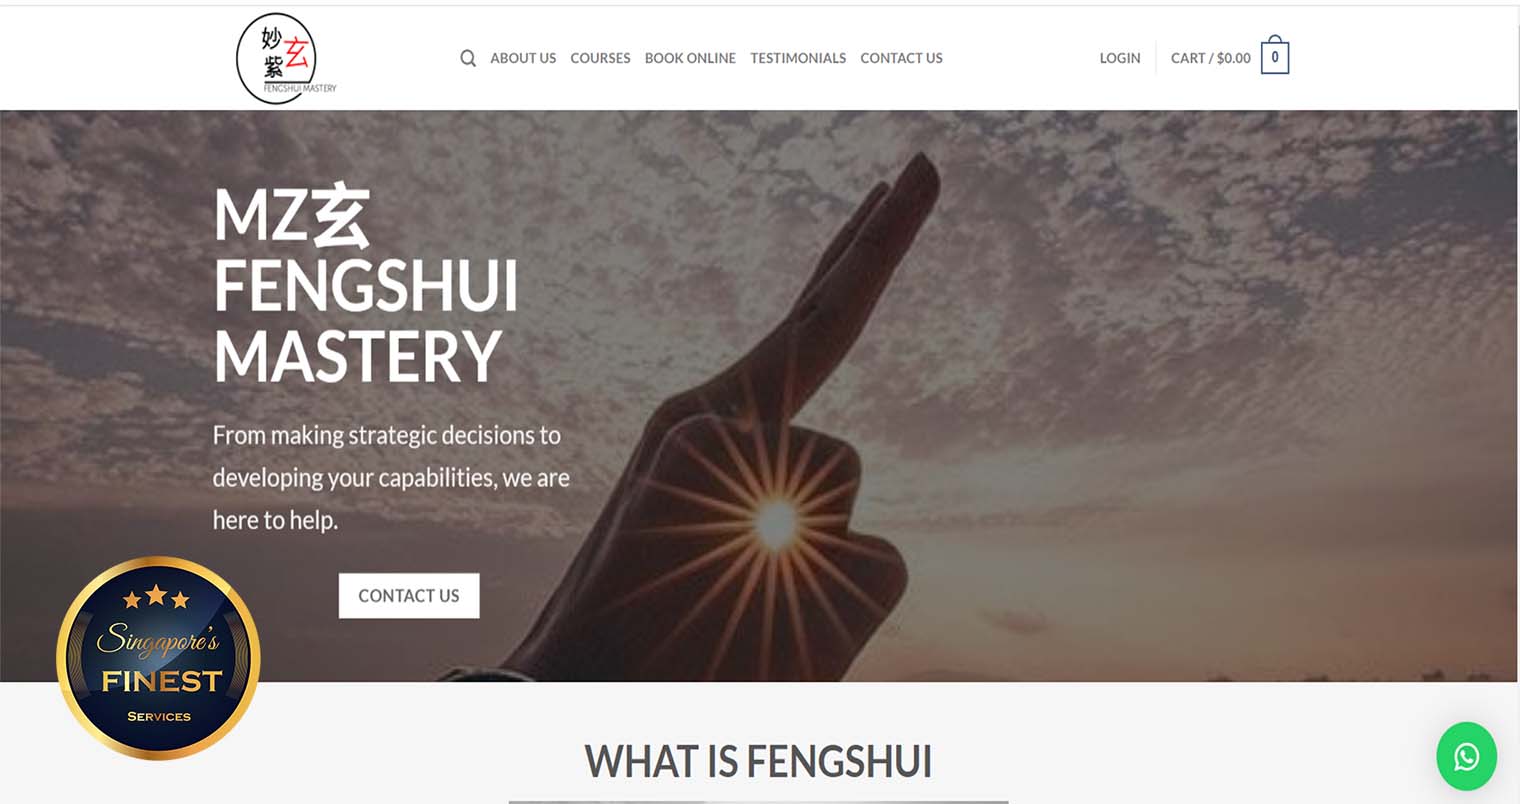 MZ玄 Fengshui Mastery - Fengshui Master Singapore